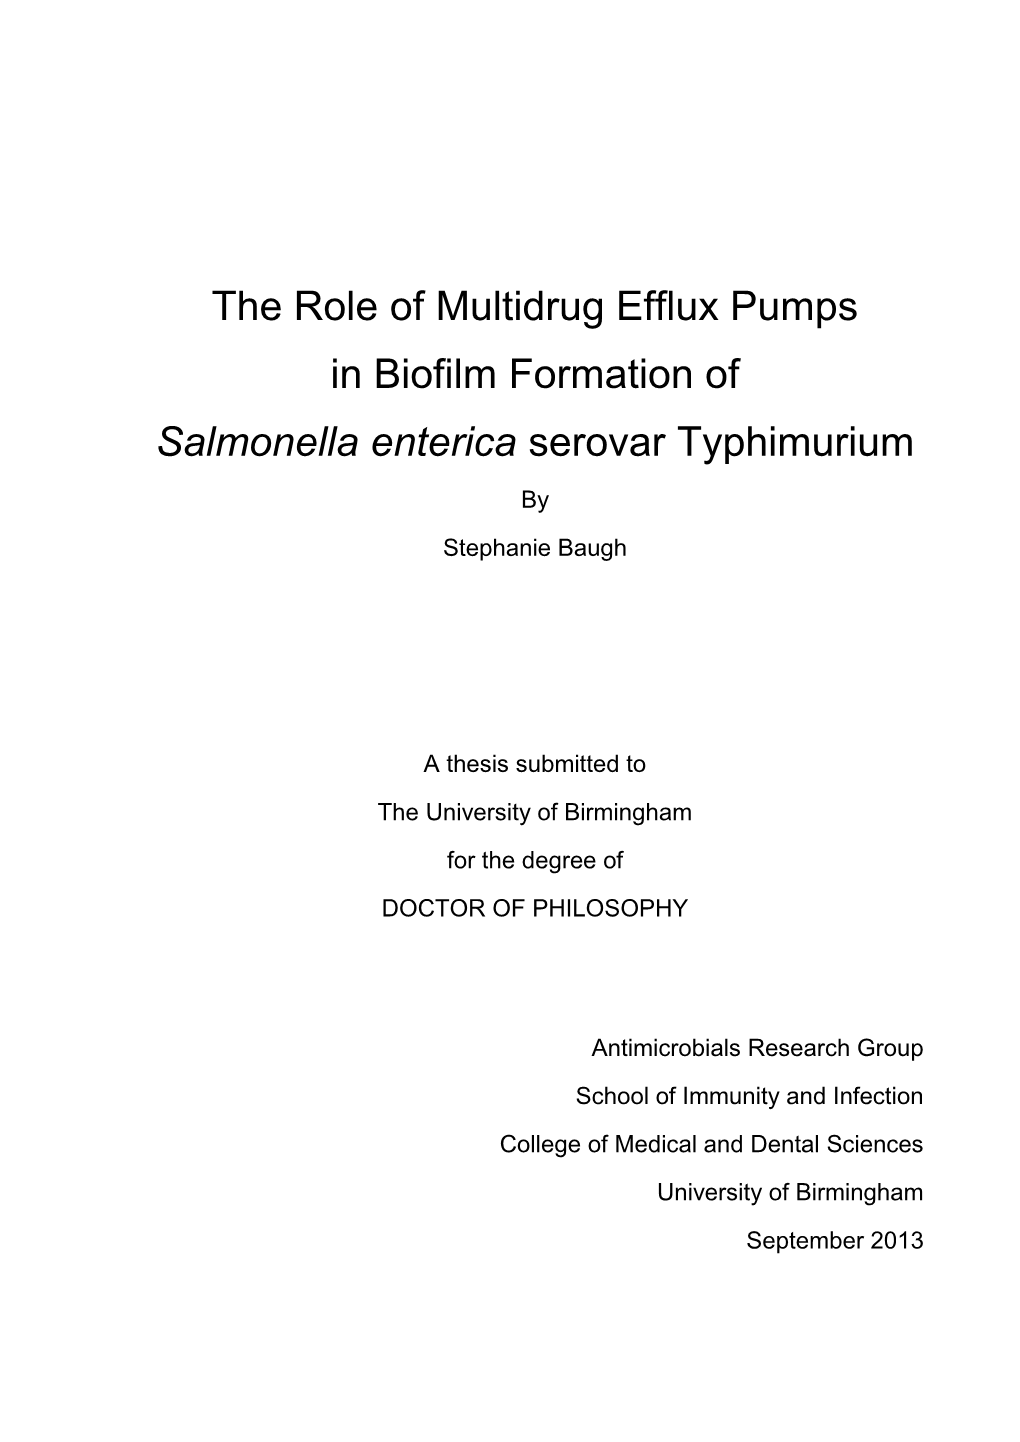 The Role of Multidrug Efflux Pumps in Biofilm Formation of Salmonella Enterica Serovar Typhimurium